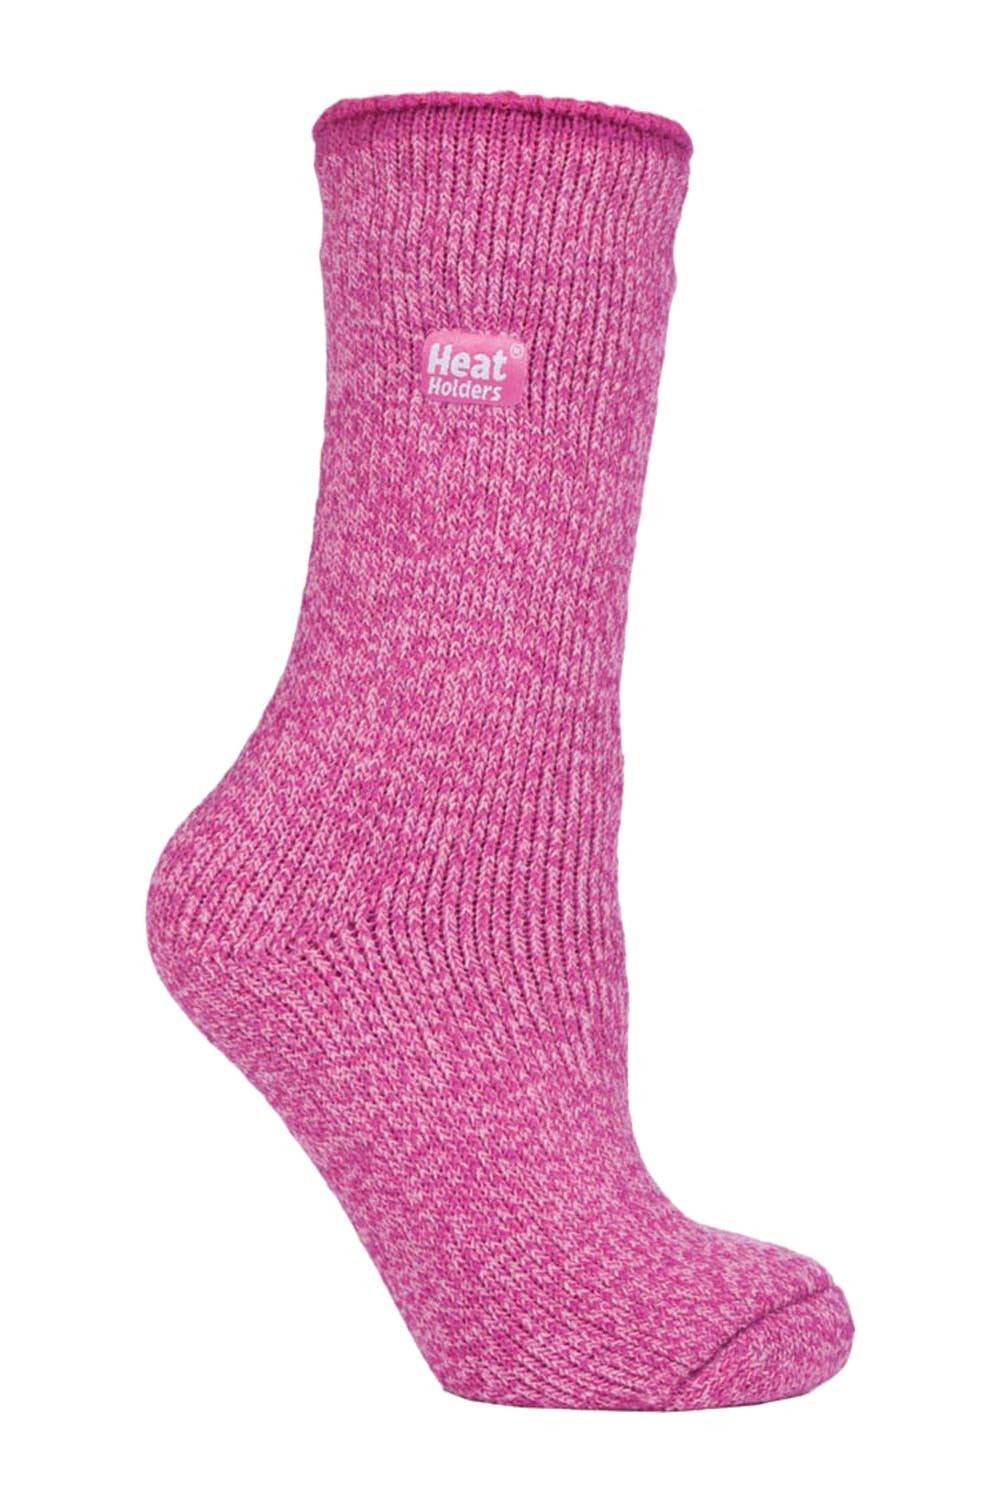 Womens Merino Wool Thermal Socks -